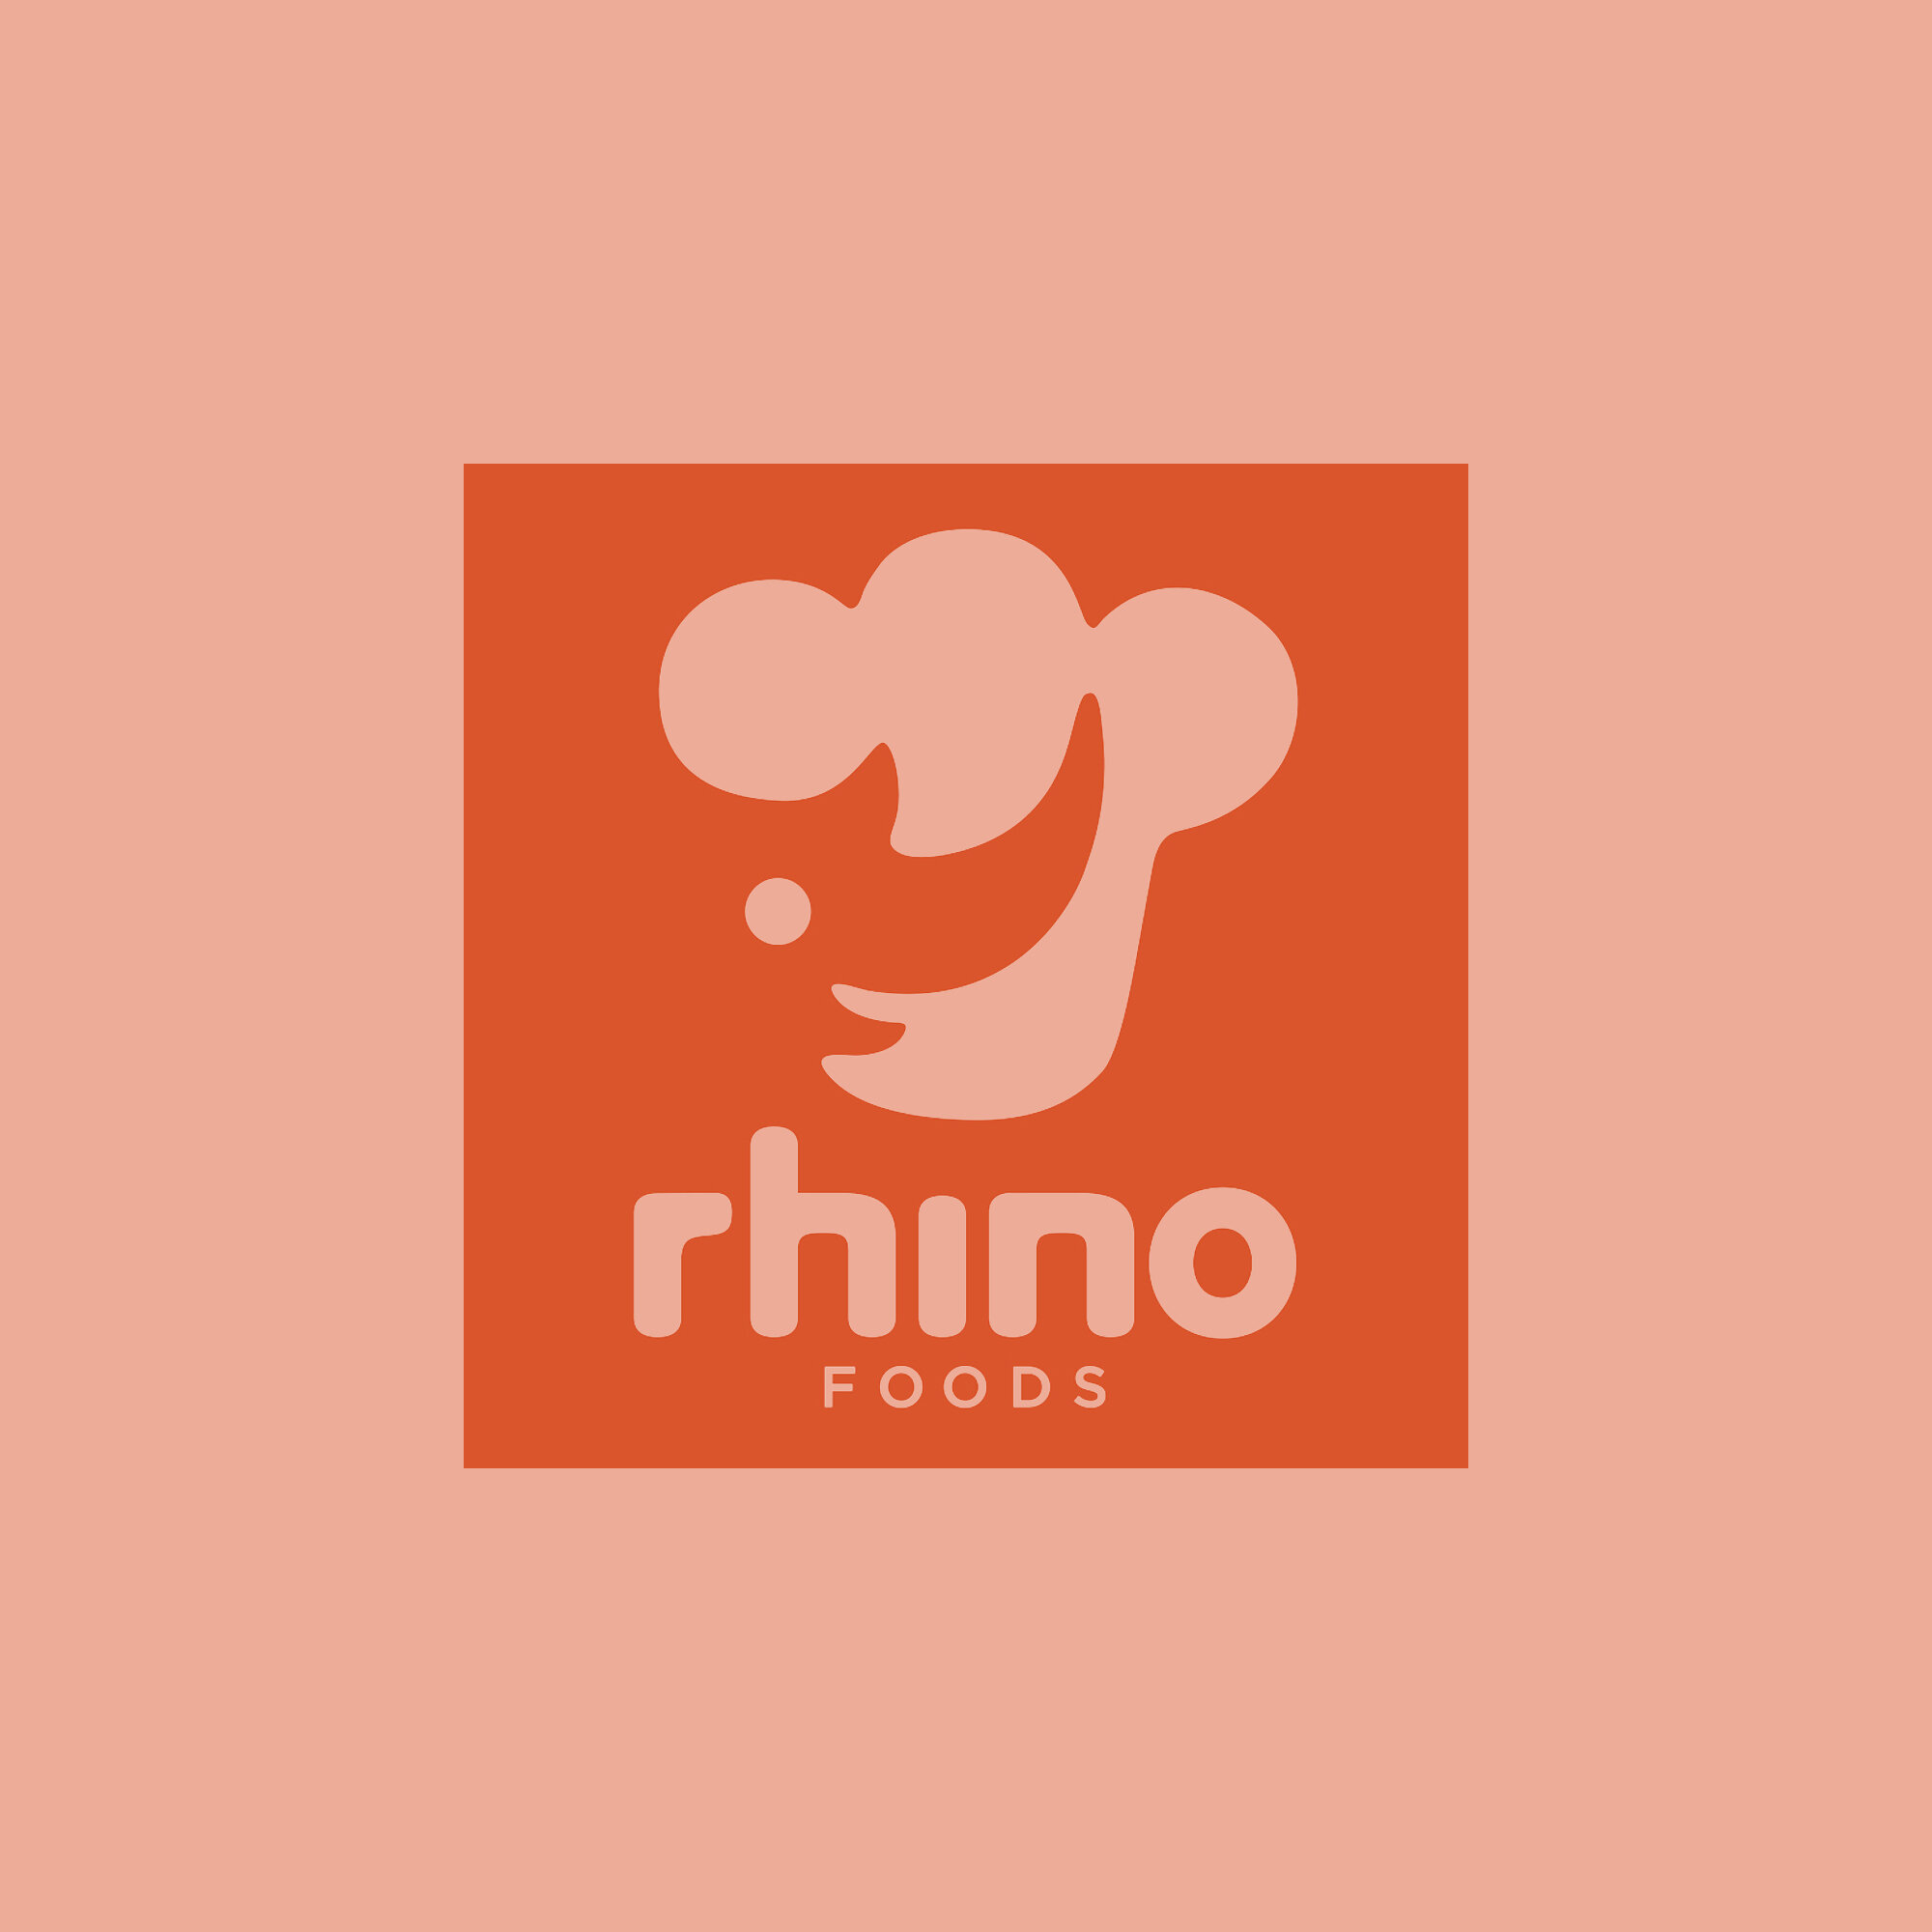 Rhino_1.jpg